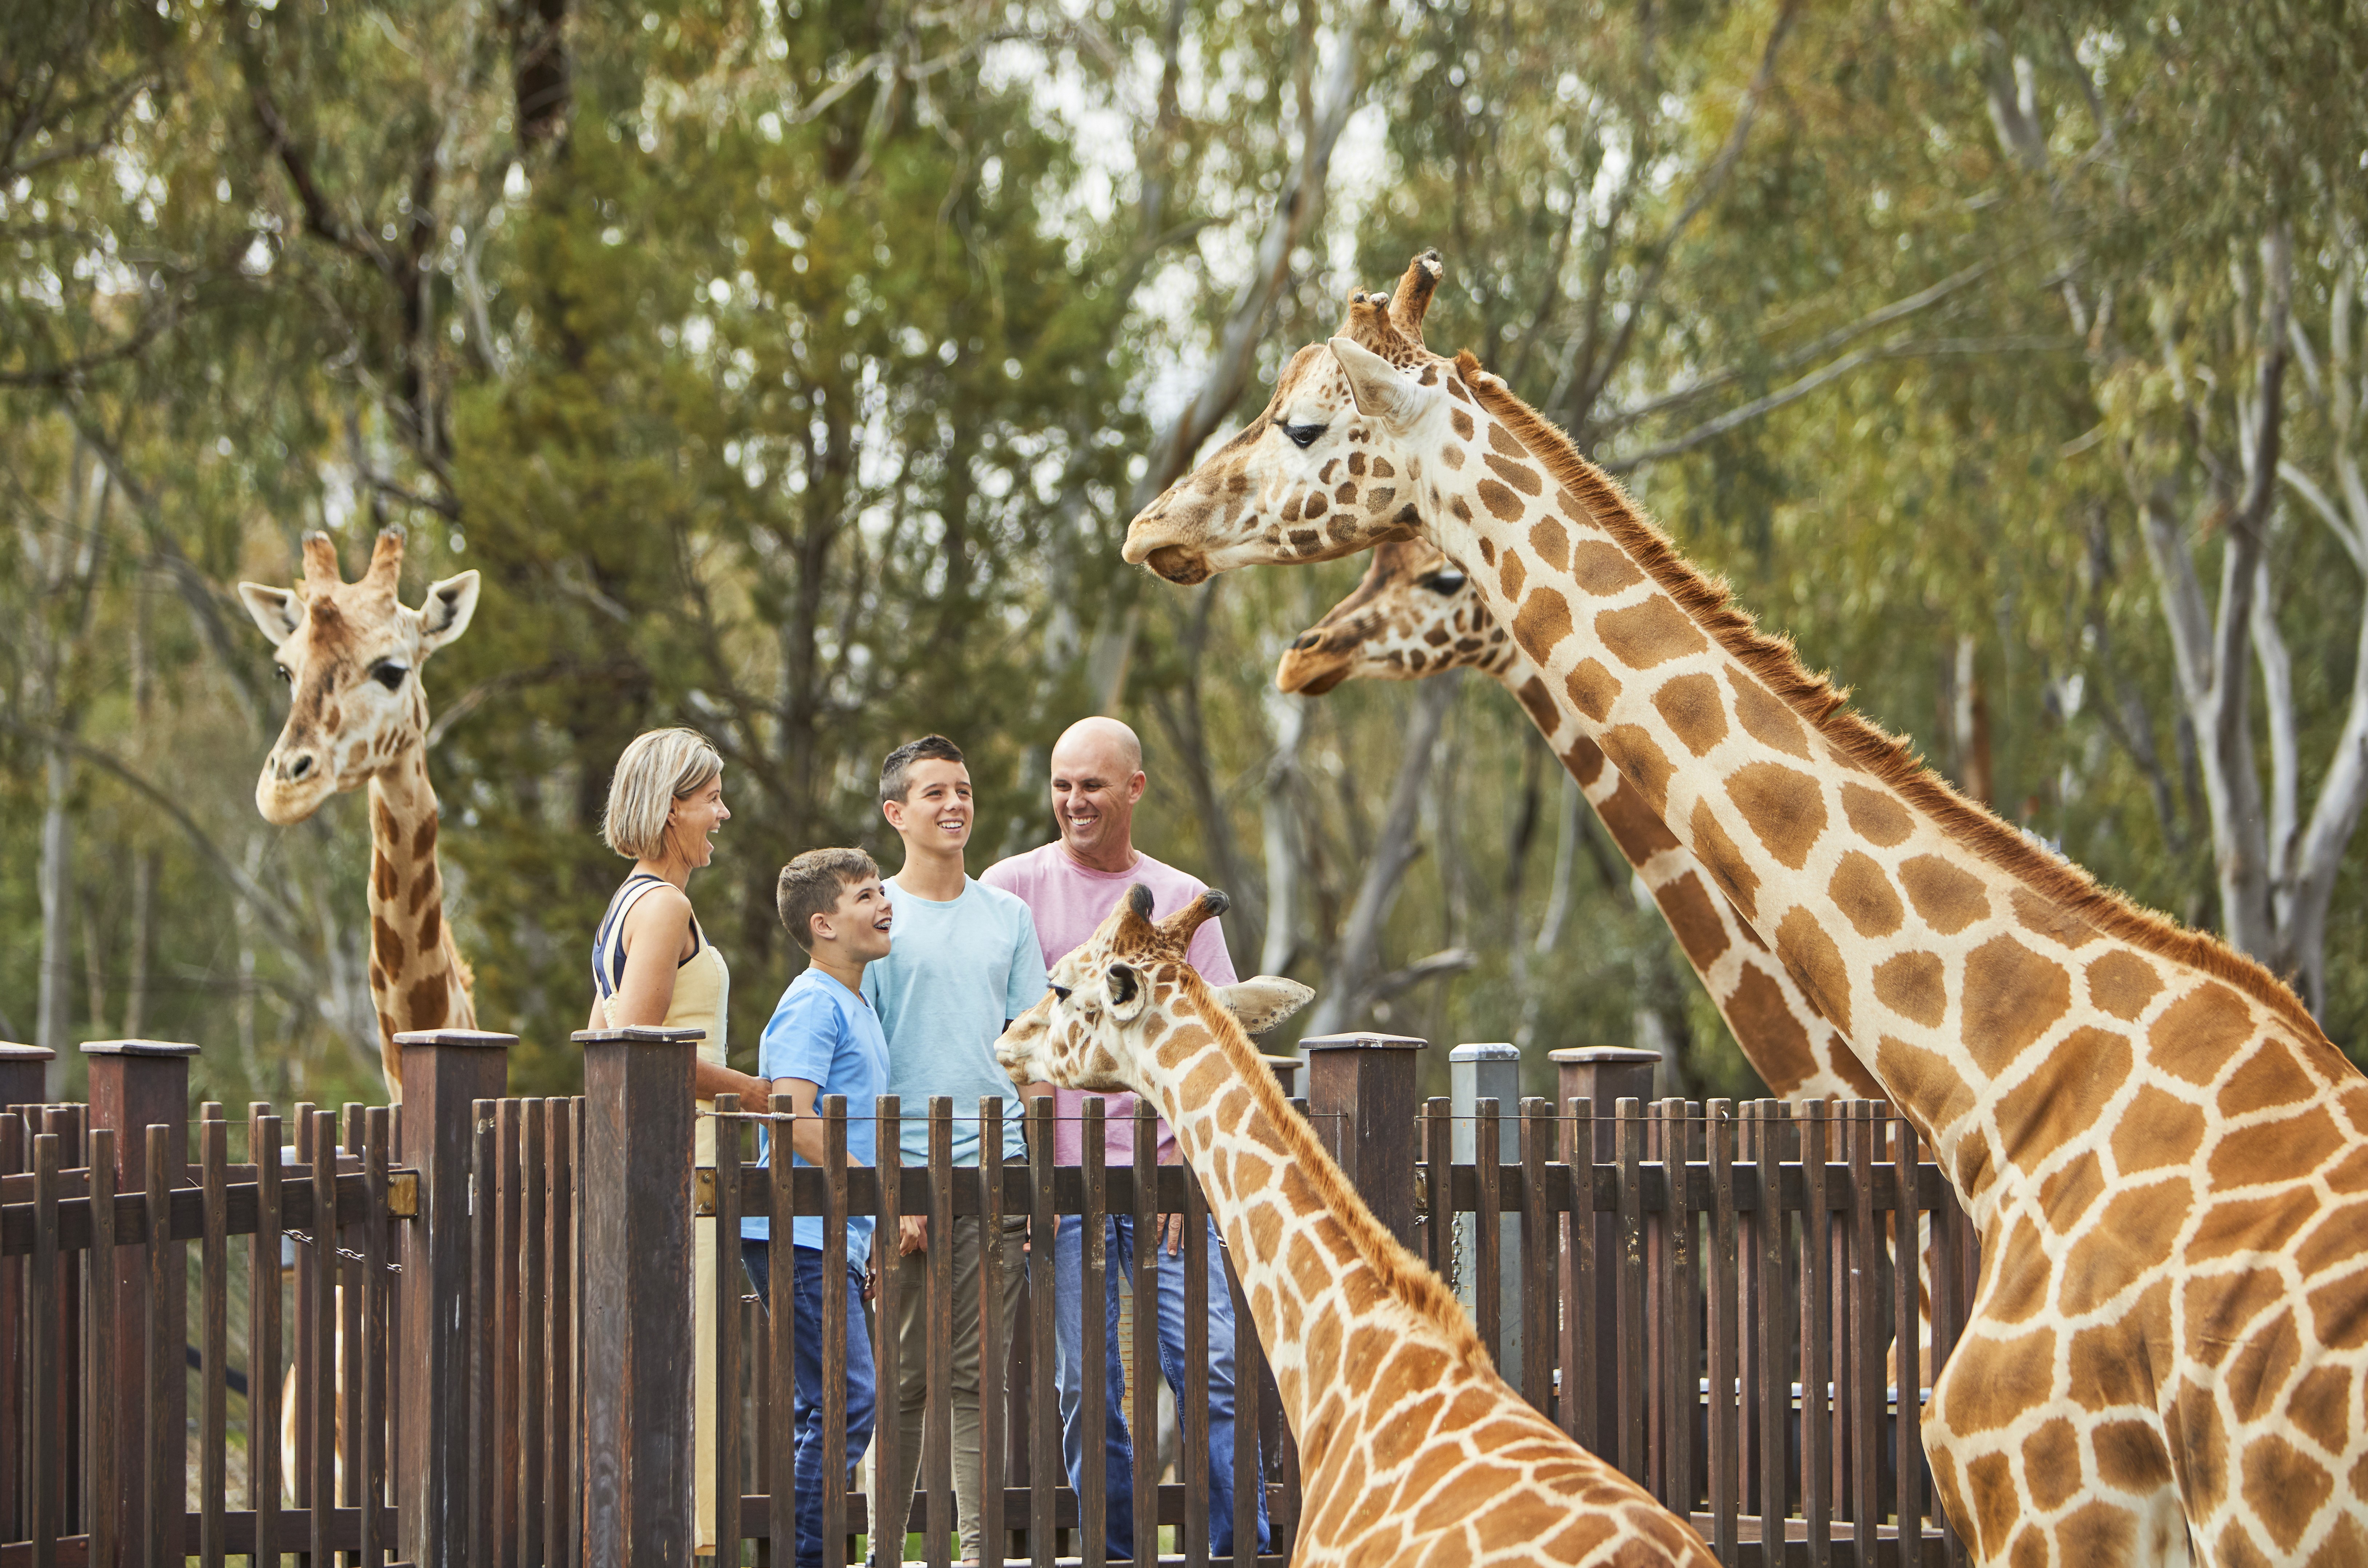 A family feeding a giraffe at Taronga Western Plains Zoo